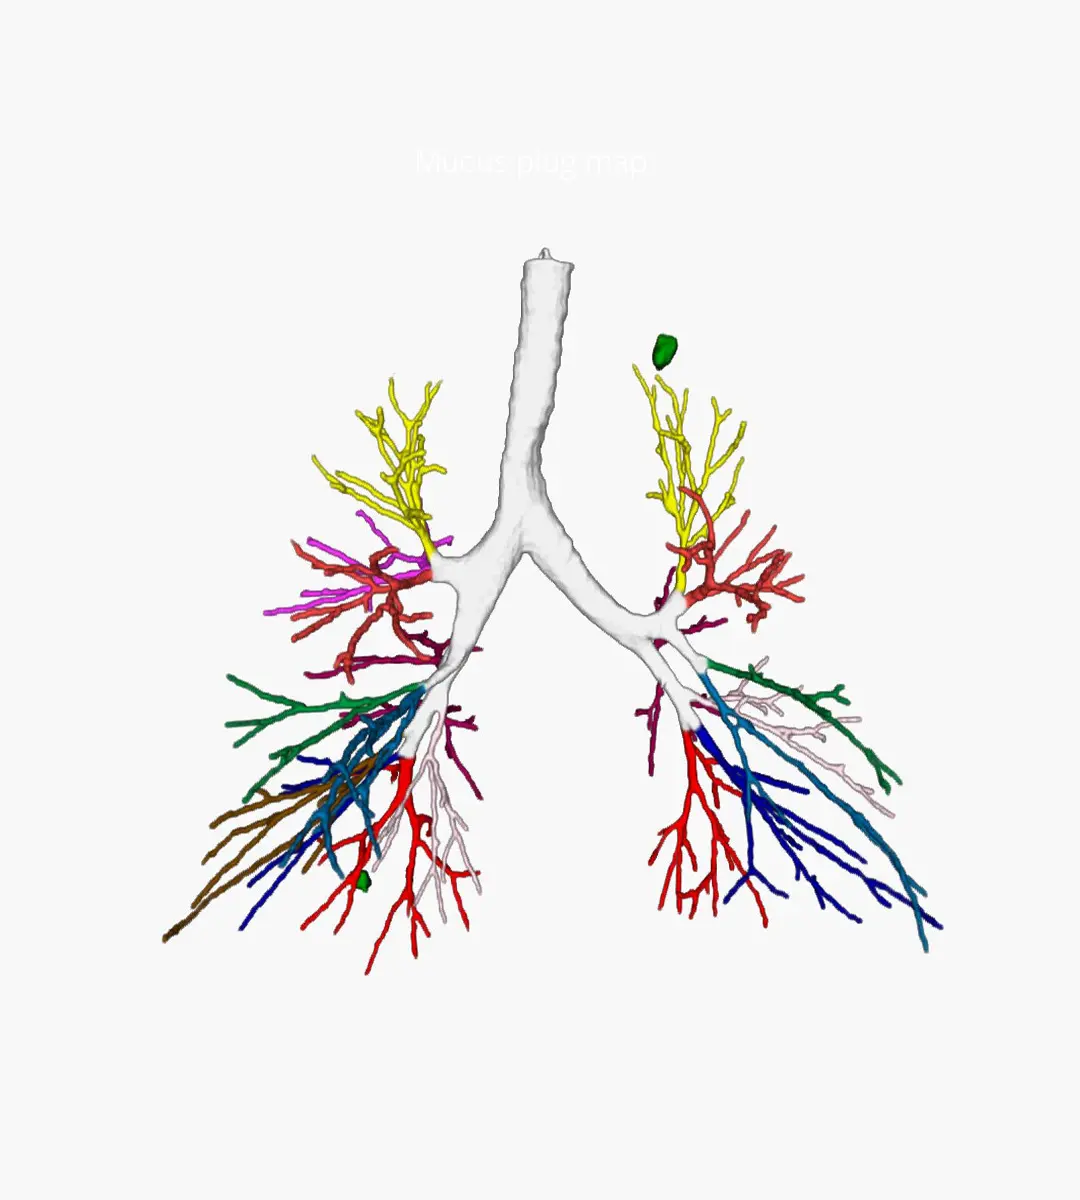 Lung nodule localization targeting